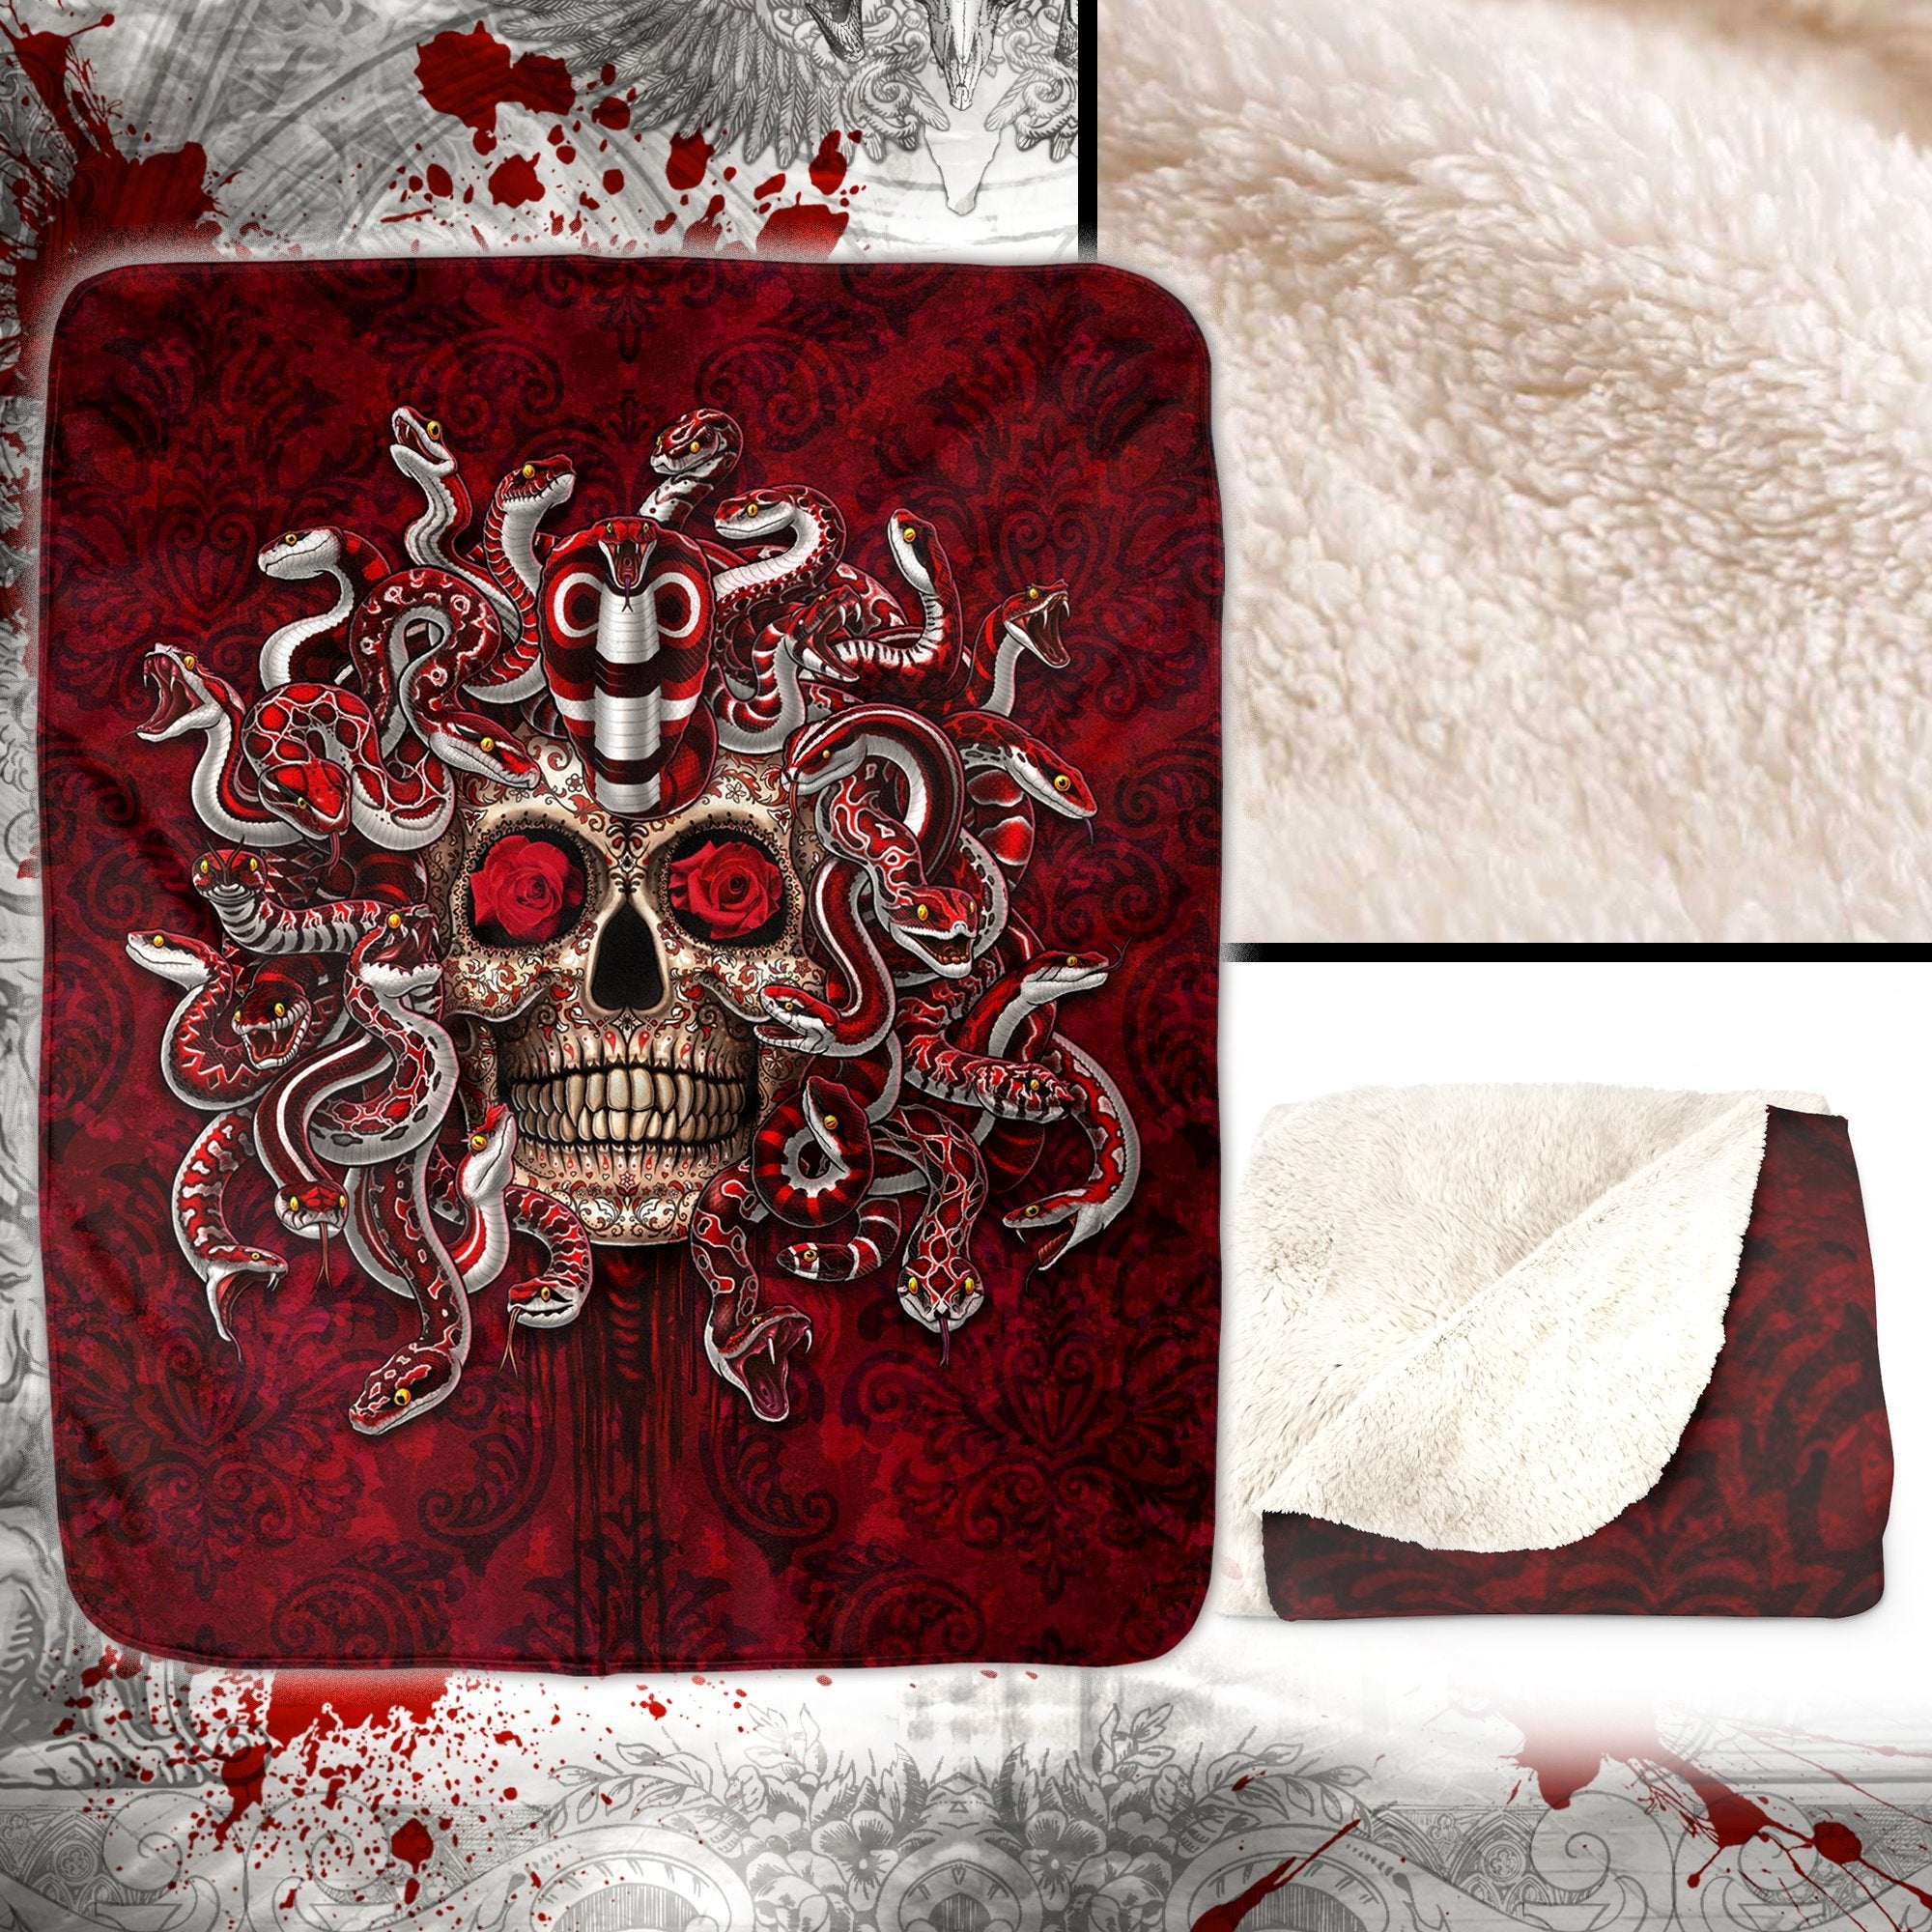 Sugar Skull Throw Fleece Blanket, Gothic Home Decor, Day of the Dead, Dia de los Muertos, Alternative Art Gift - Medusa - Abysm Internal